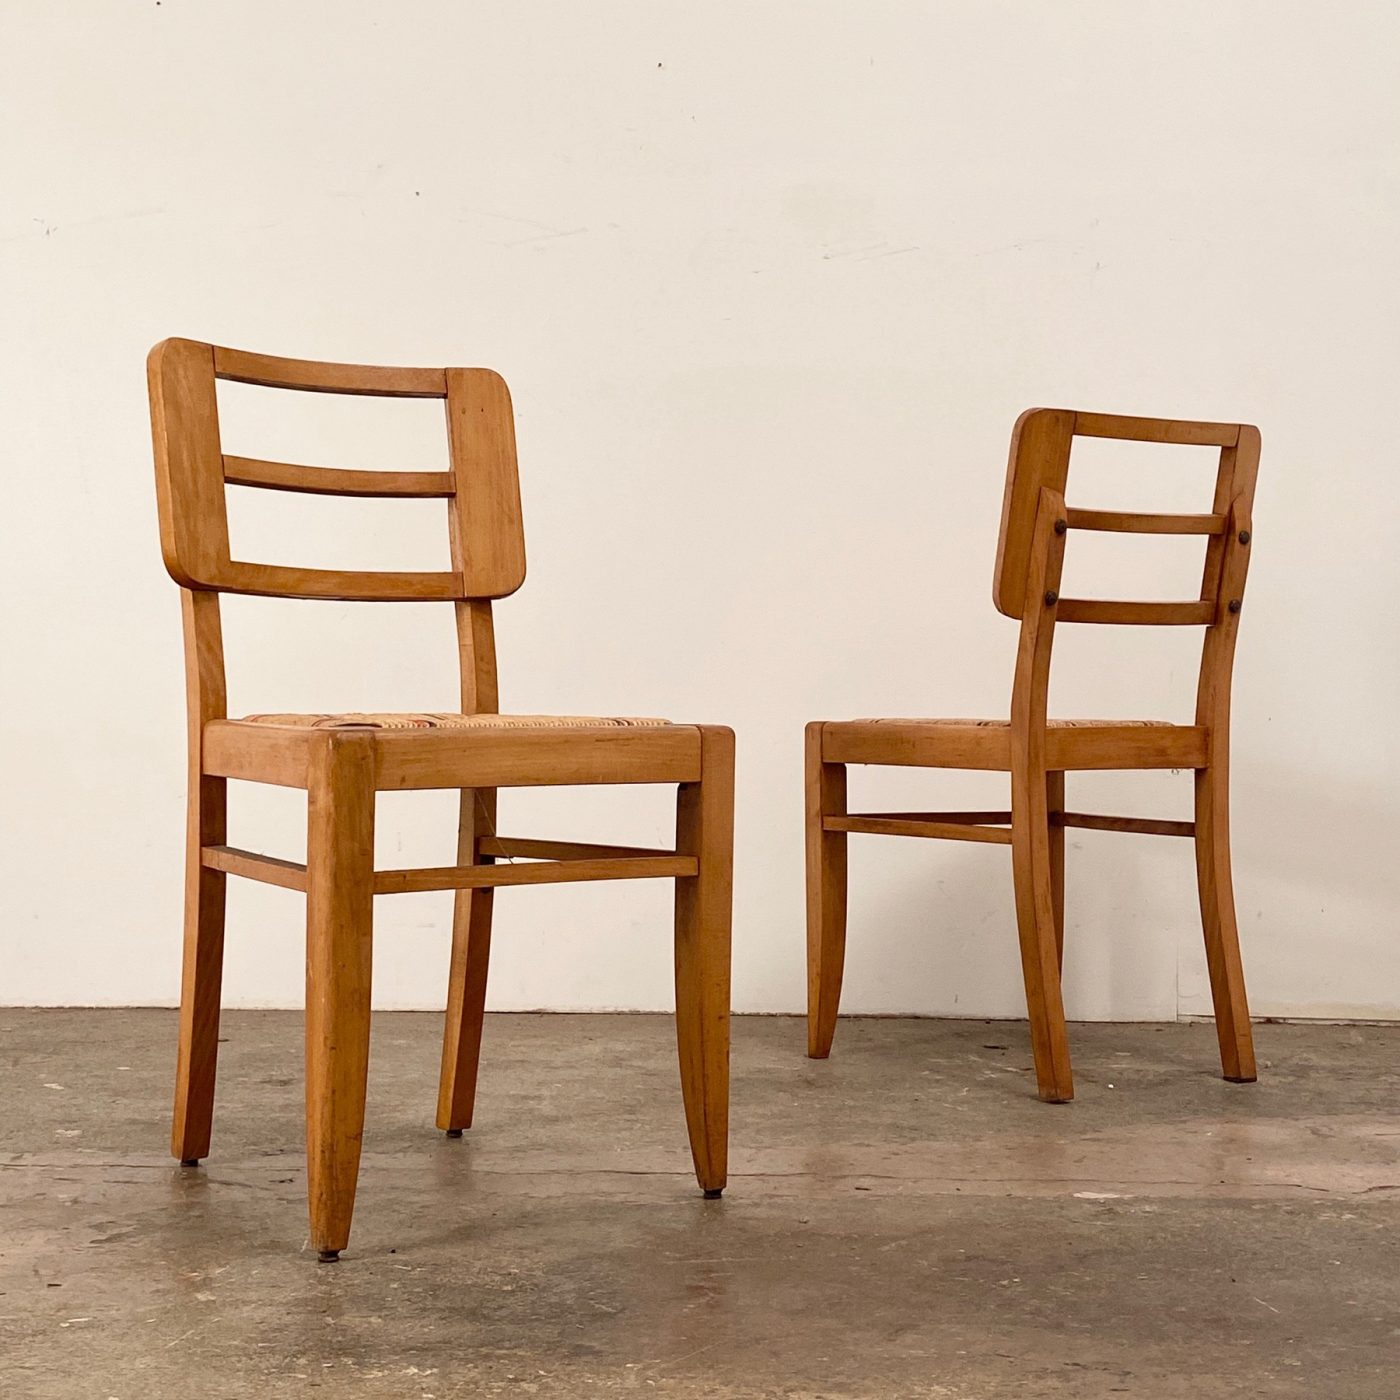 objet-vagabond-cruege-chairs0004